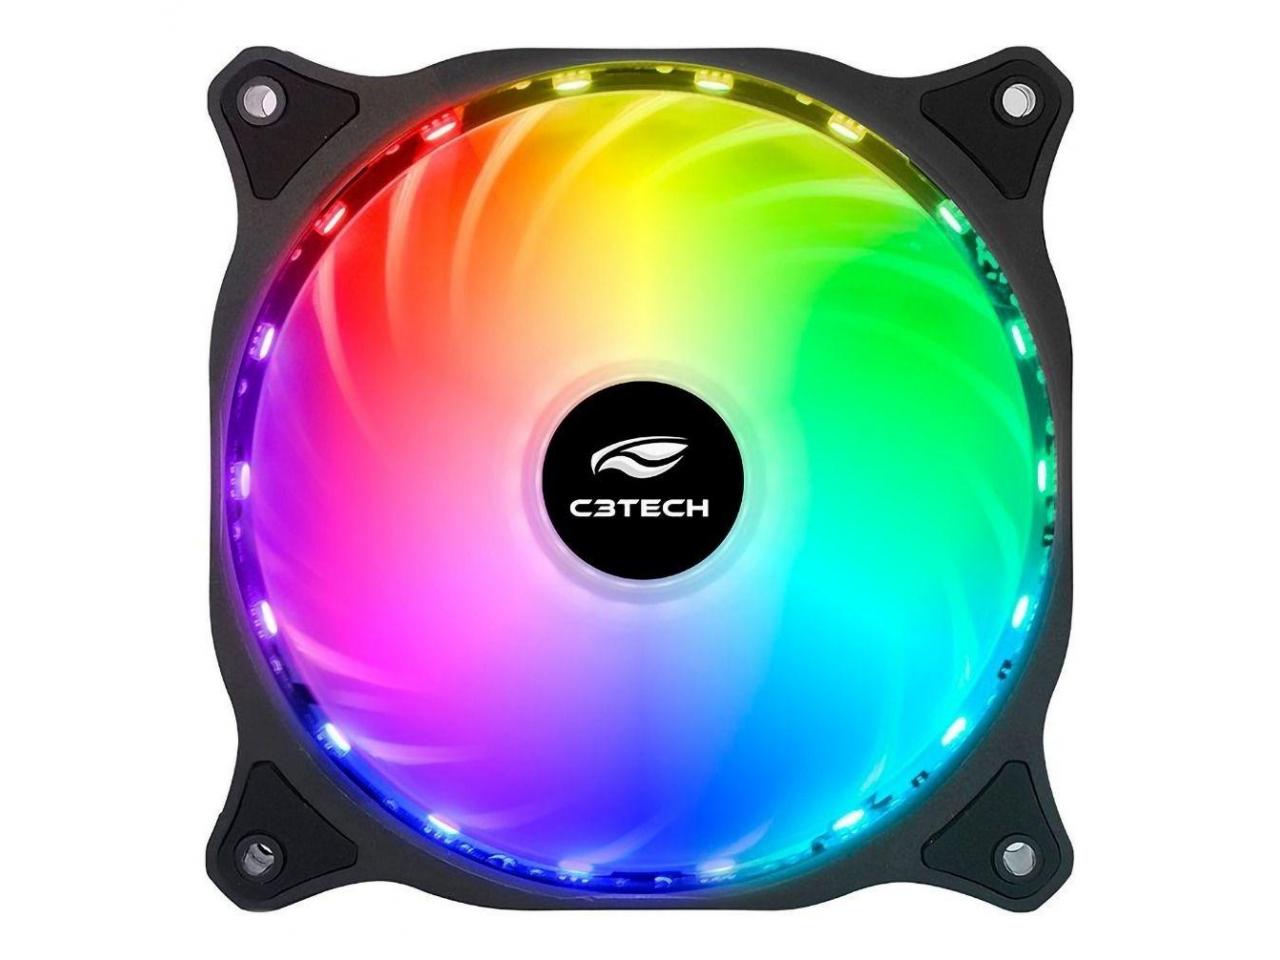 FAN Cooler C3Tech 120mm LED RGB F9-L150RGB